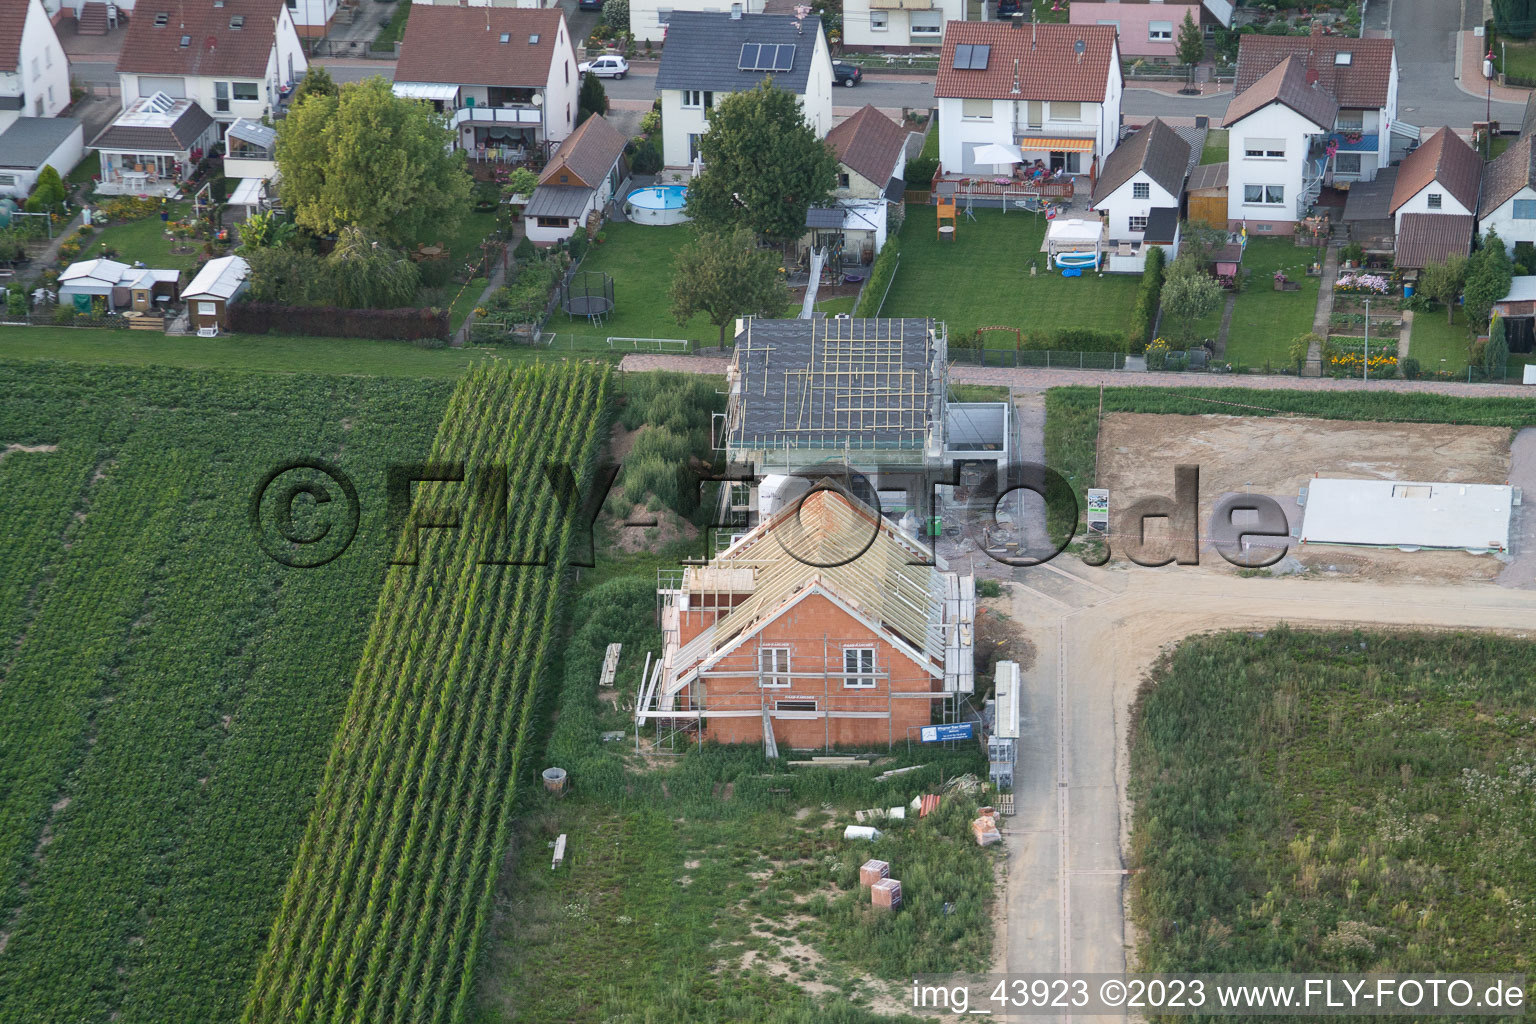 Brotäcker new development area in Steinweiler in the state Rhineland-Palatinate, Germany seen from above